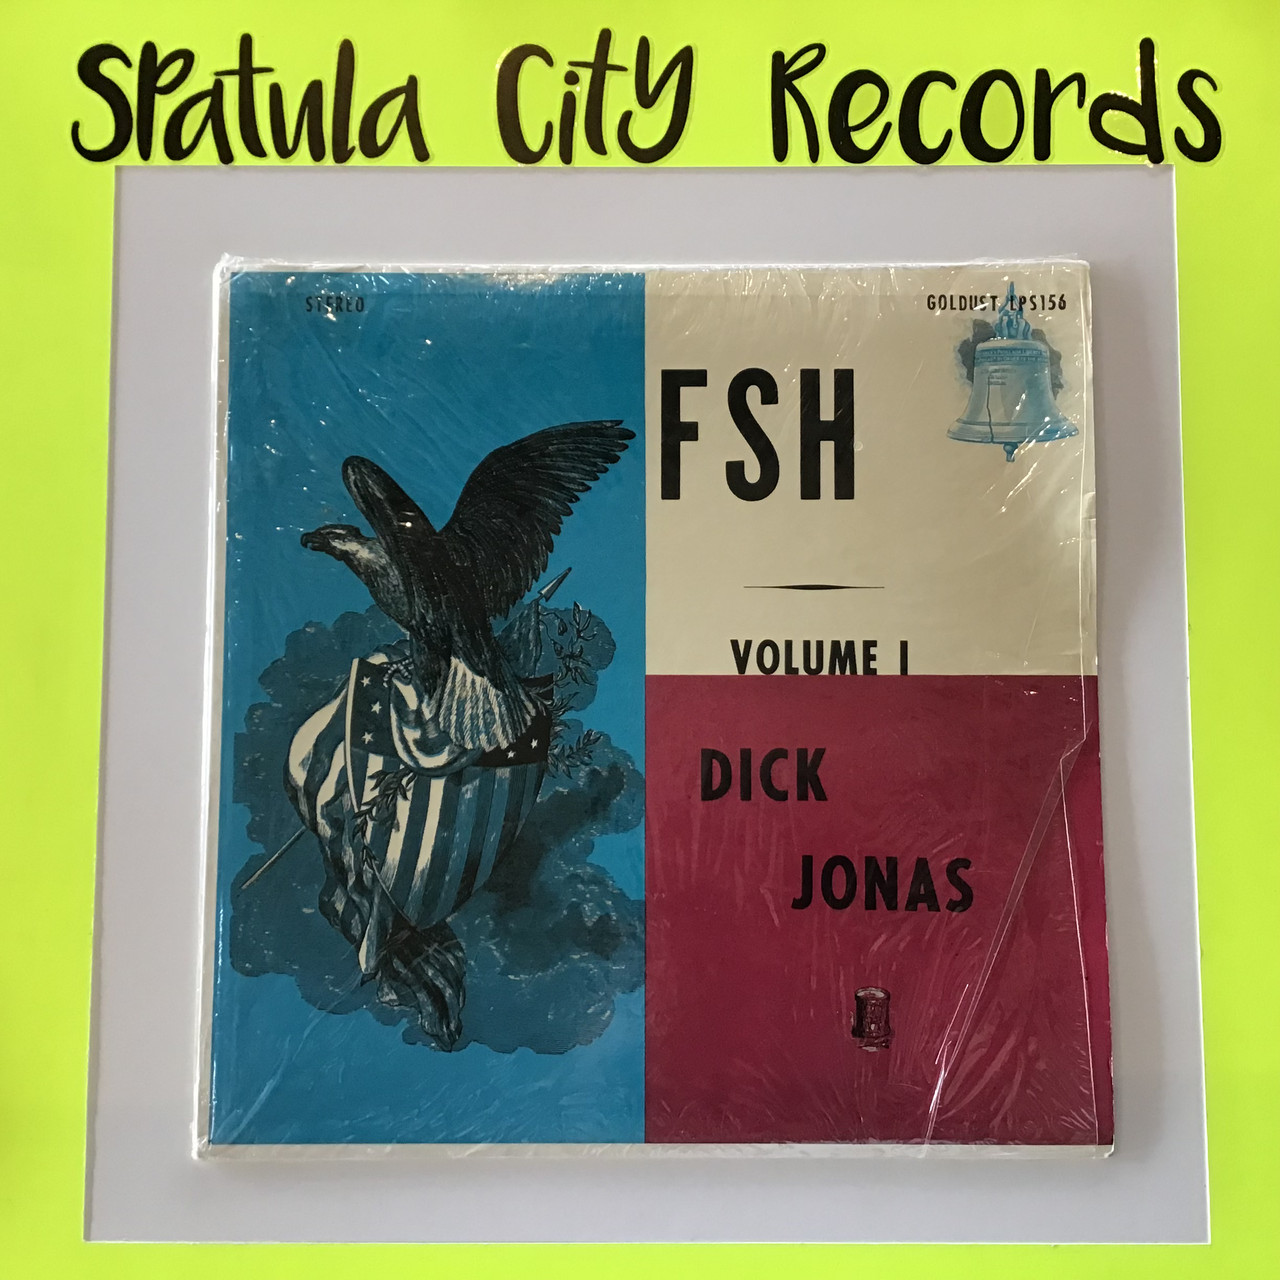 Dick Jonas - FSH Volume 1 - vinyl record album LP